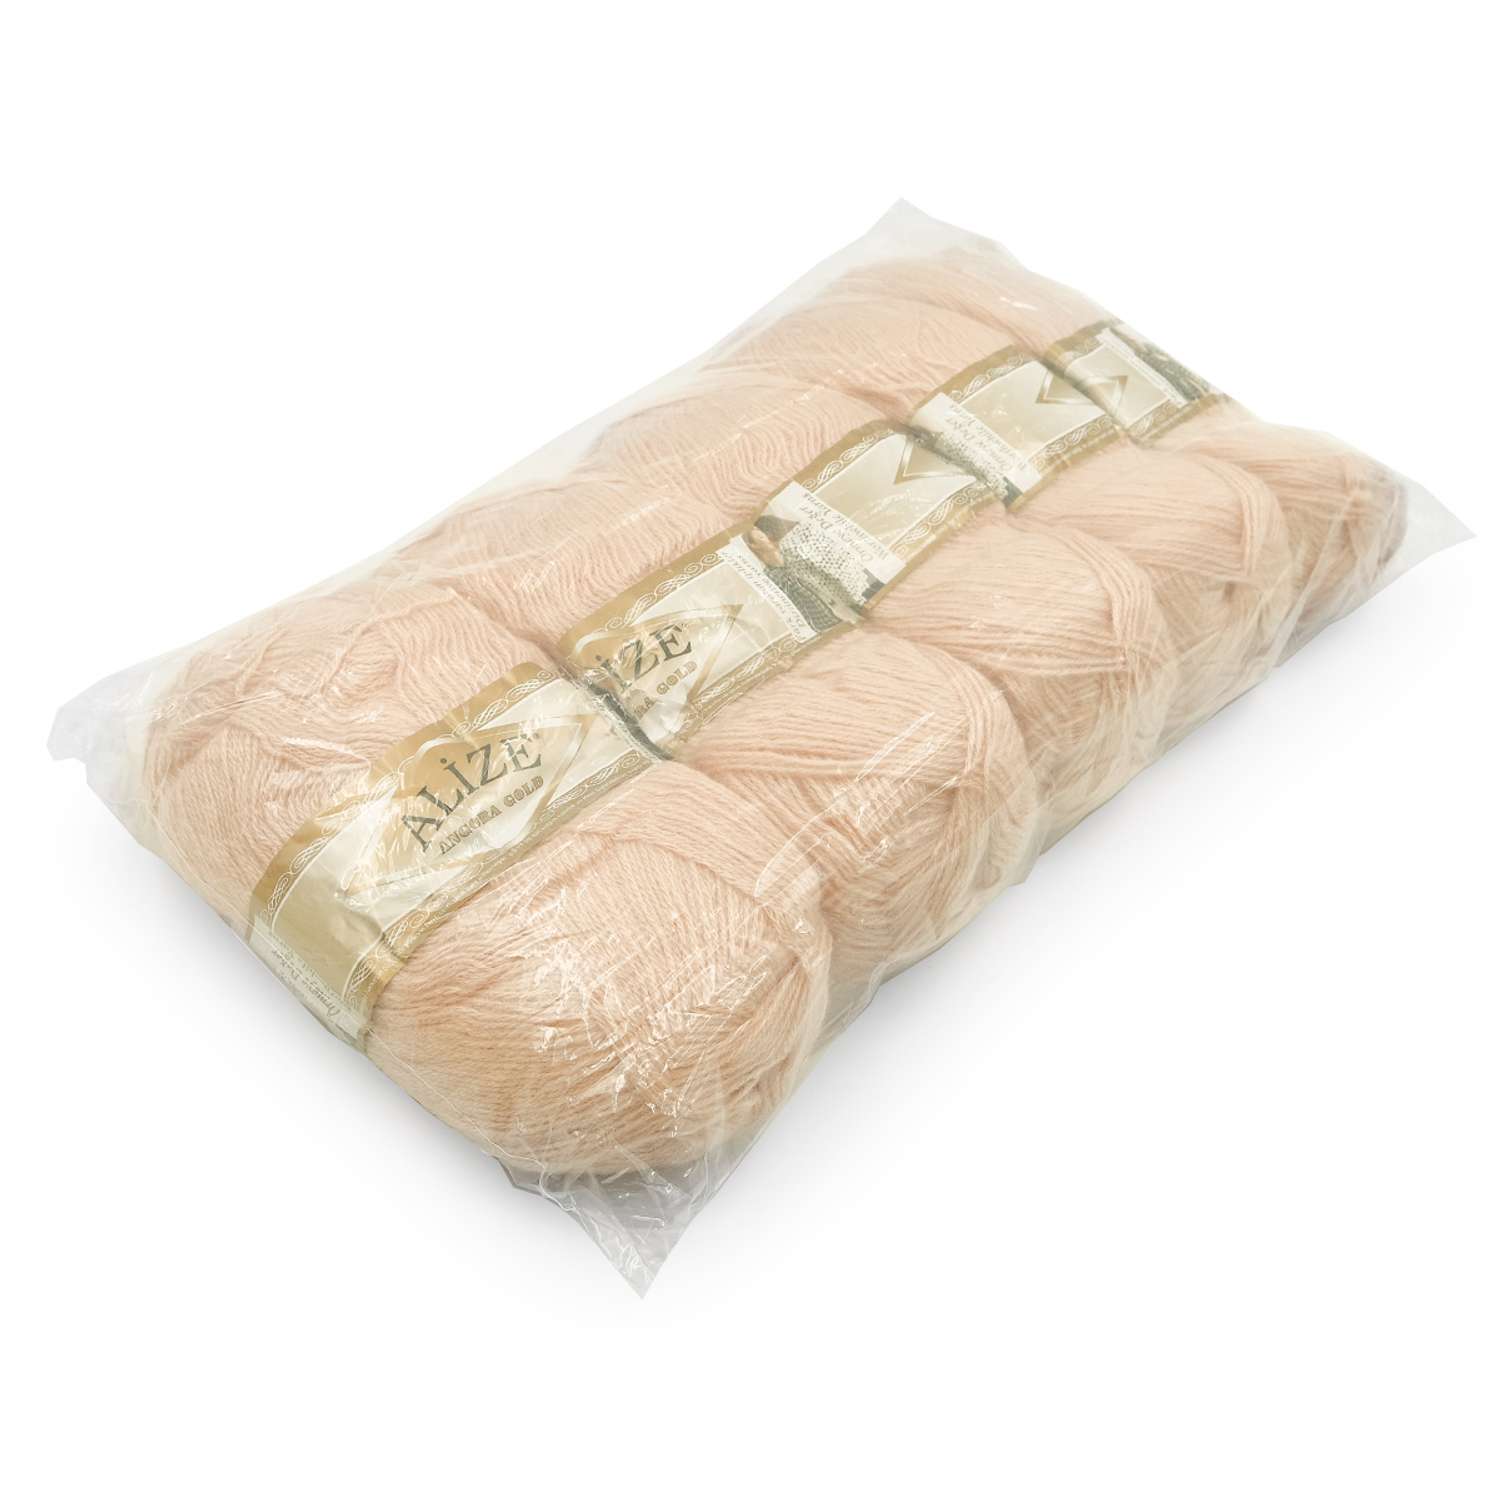 Пряжа Alize мягкая теплая для шарфов кардиганов Angora Gold 100 гр 550 м 5 мотков 404 пудра - фото 8